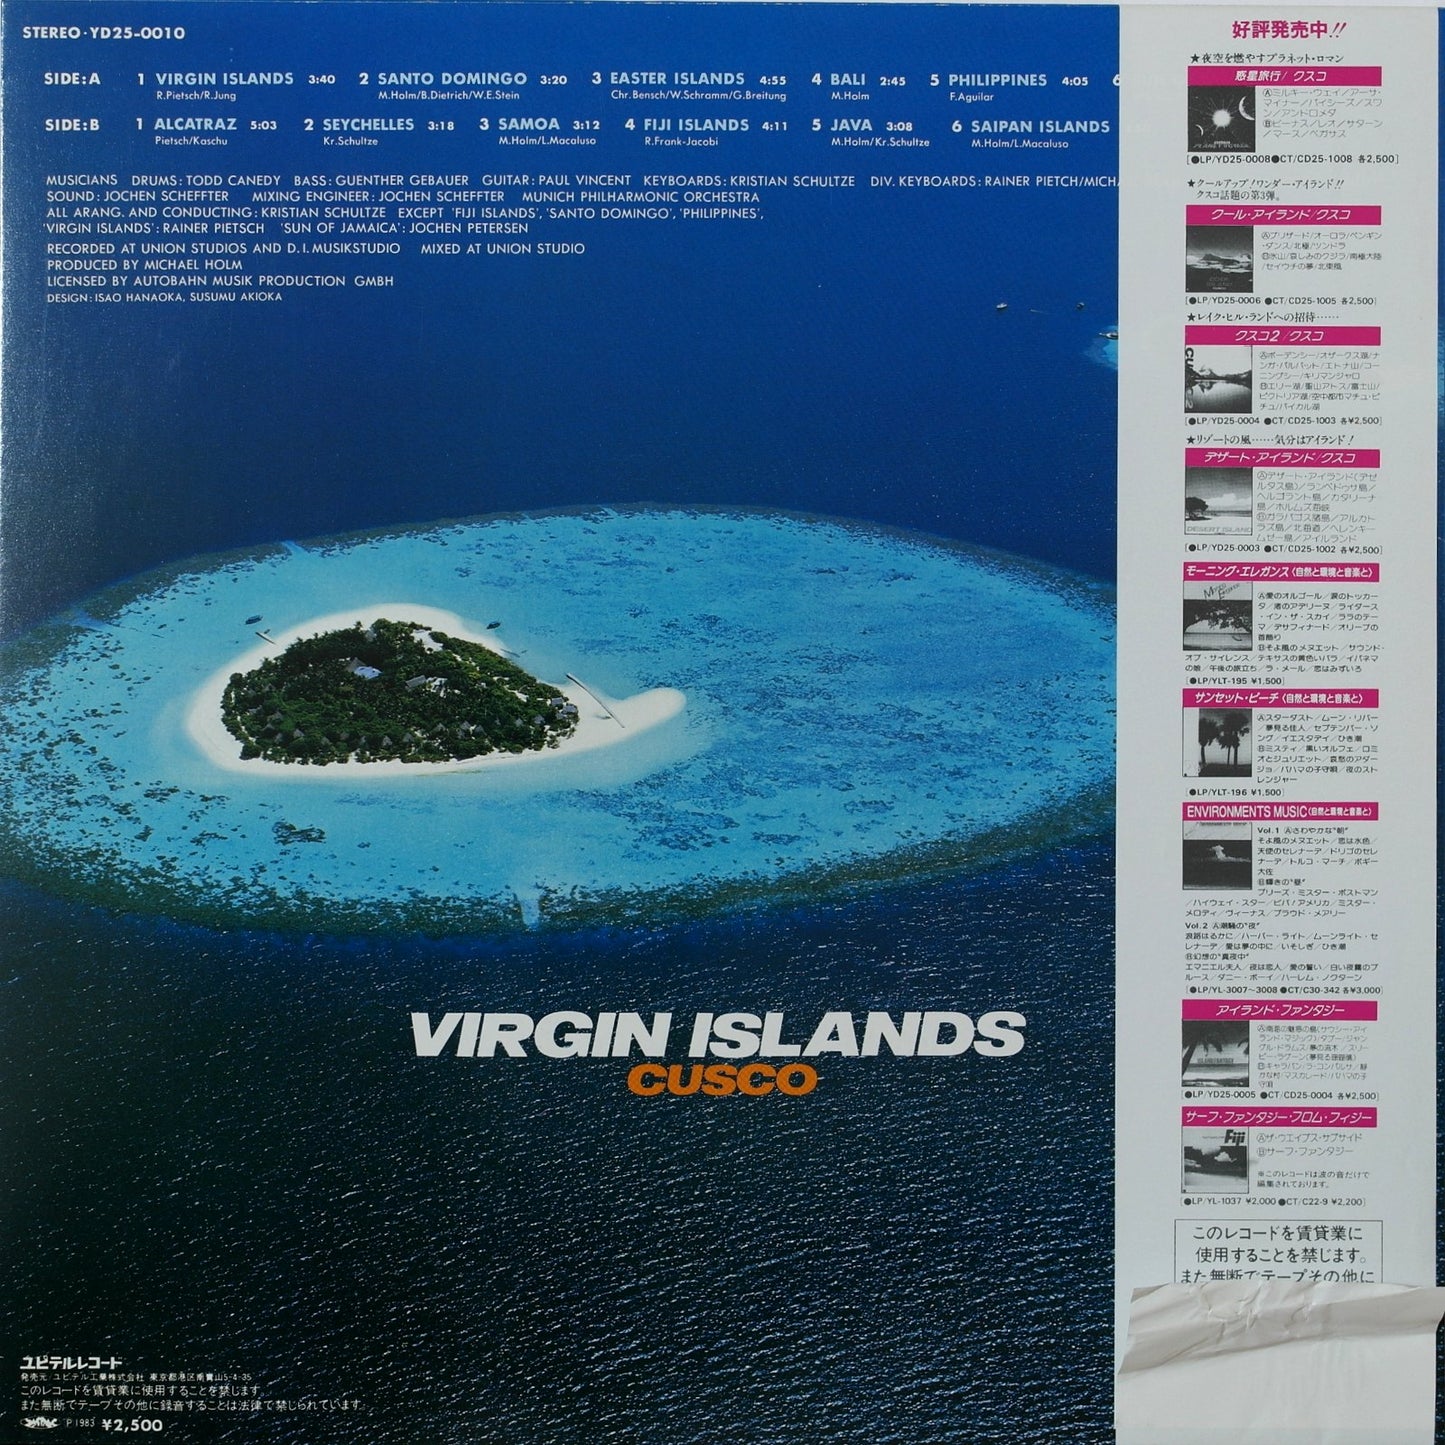 CUSCO - Virgin Islands